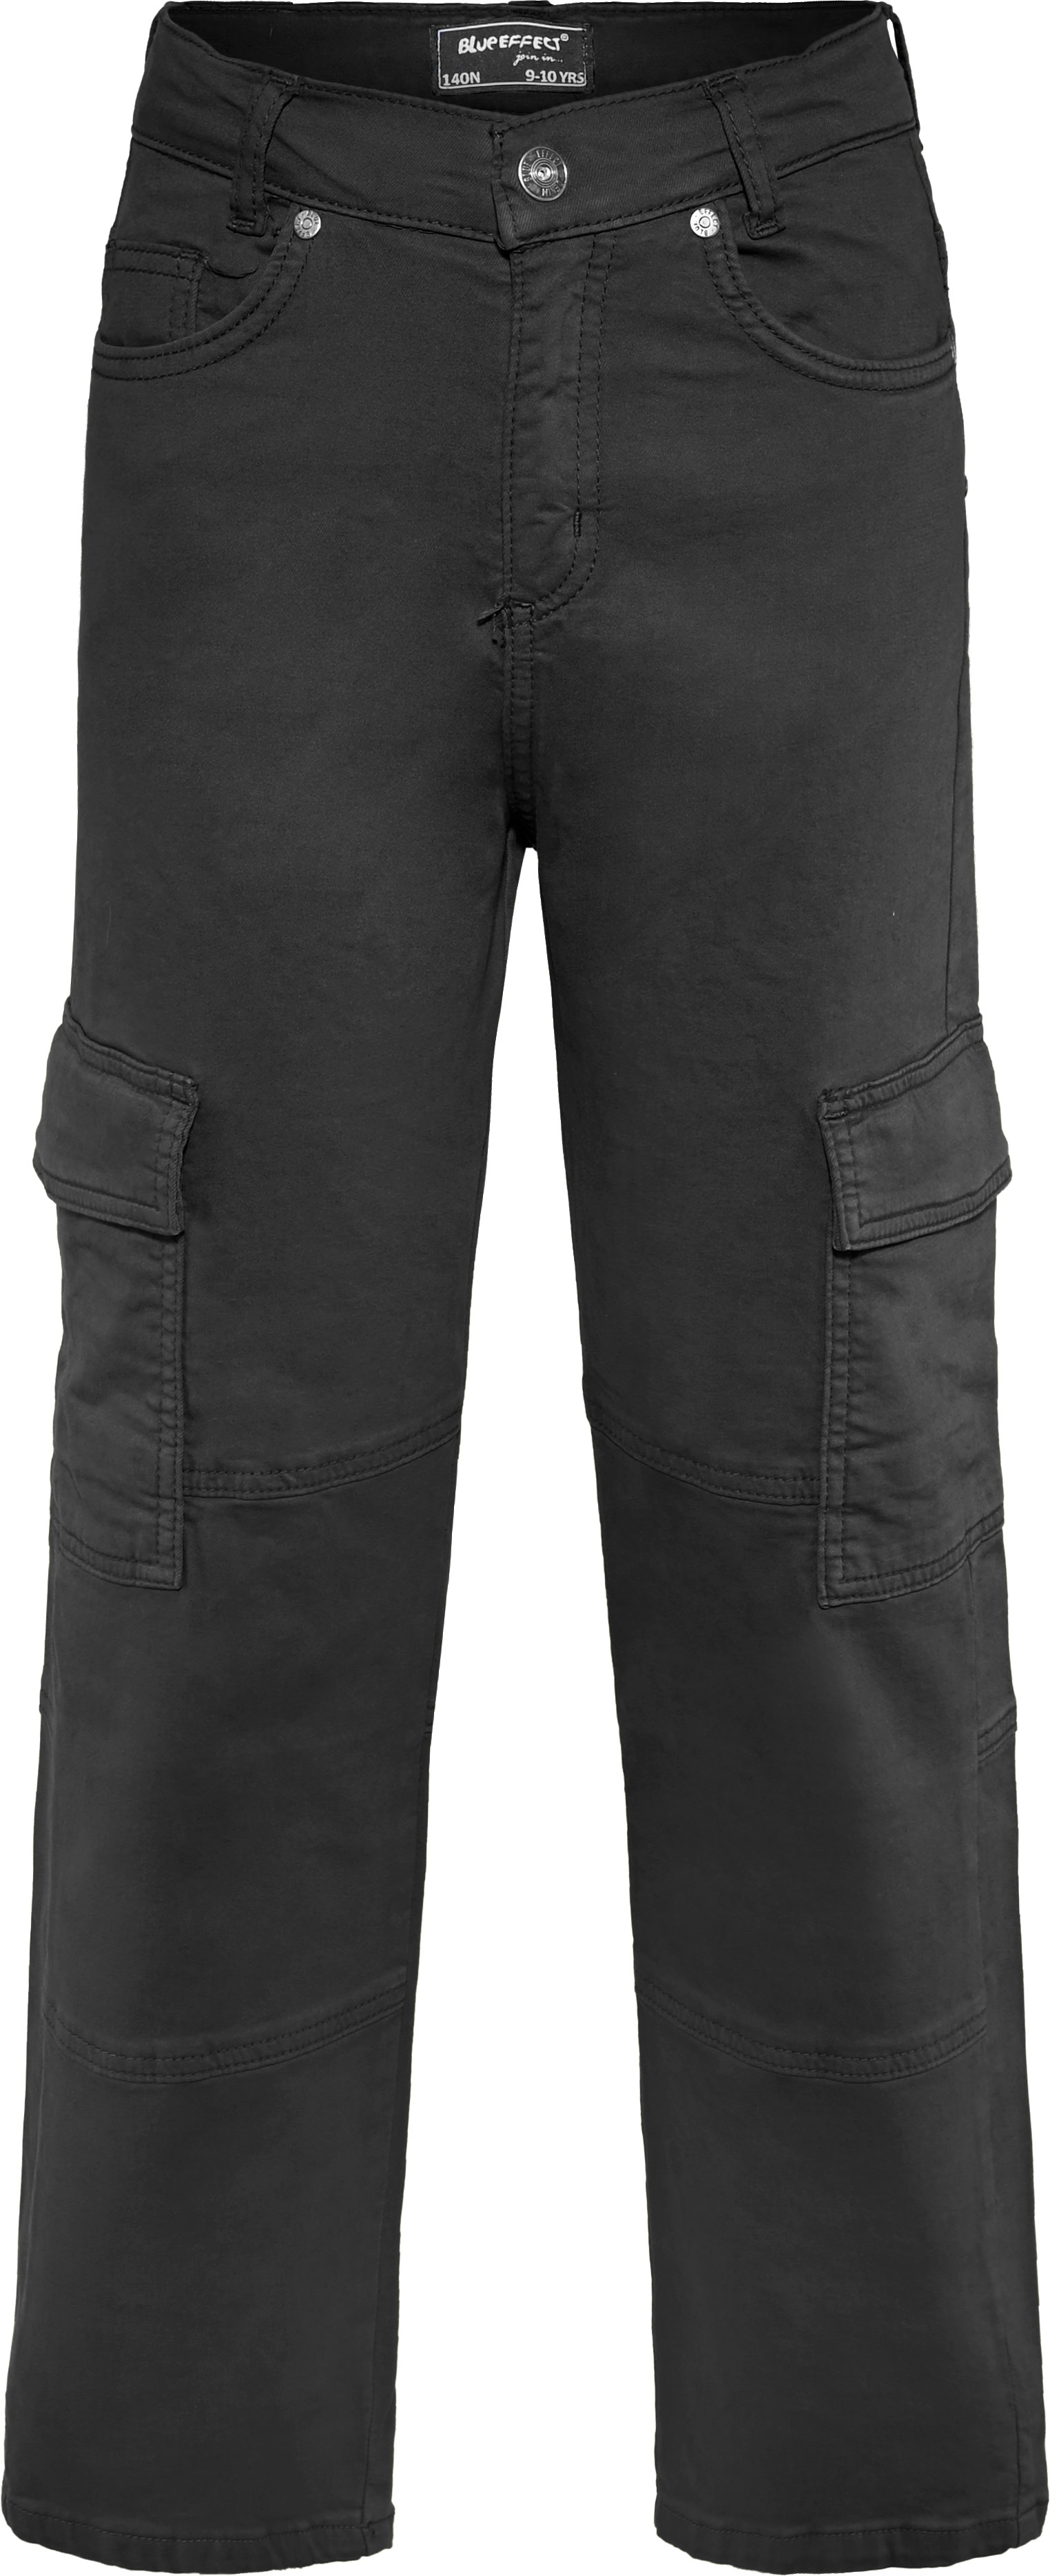 2855-NOS Boys Baggy Cargo Pant verfügbar in Slim,Normal